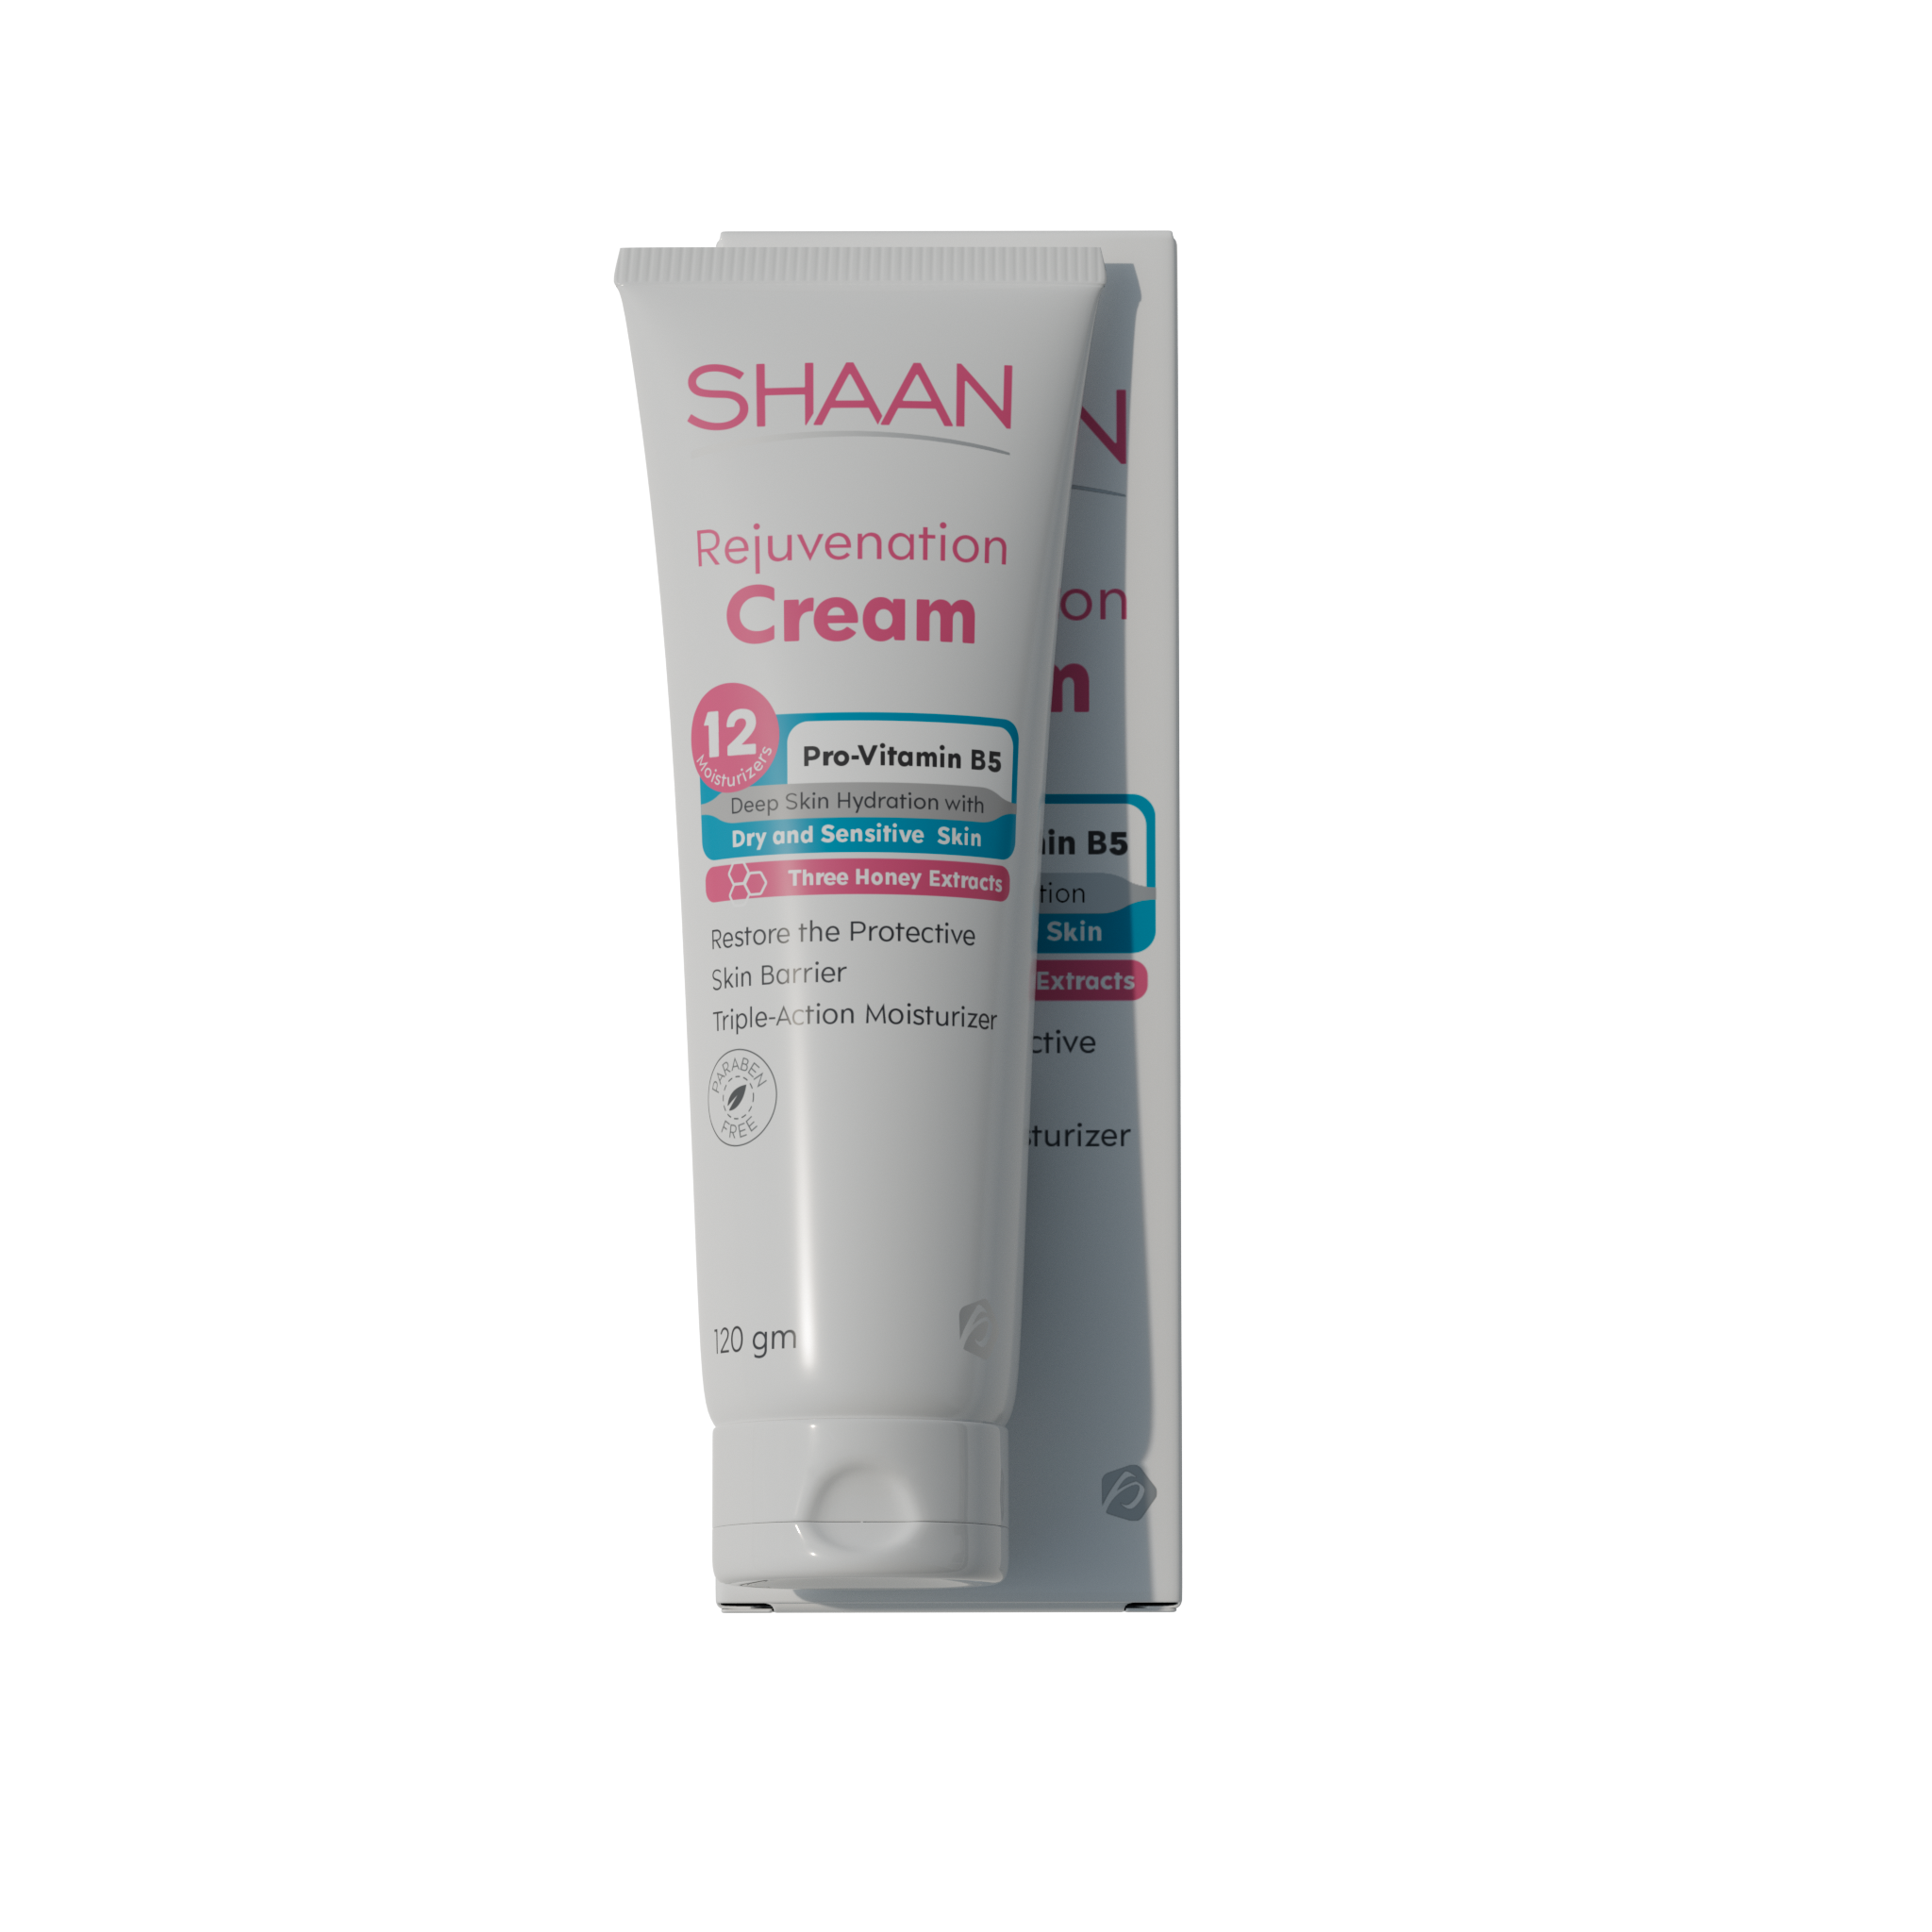 Shaan Rejuvenation Cream 120 gm